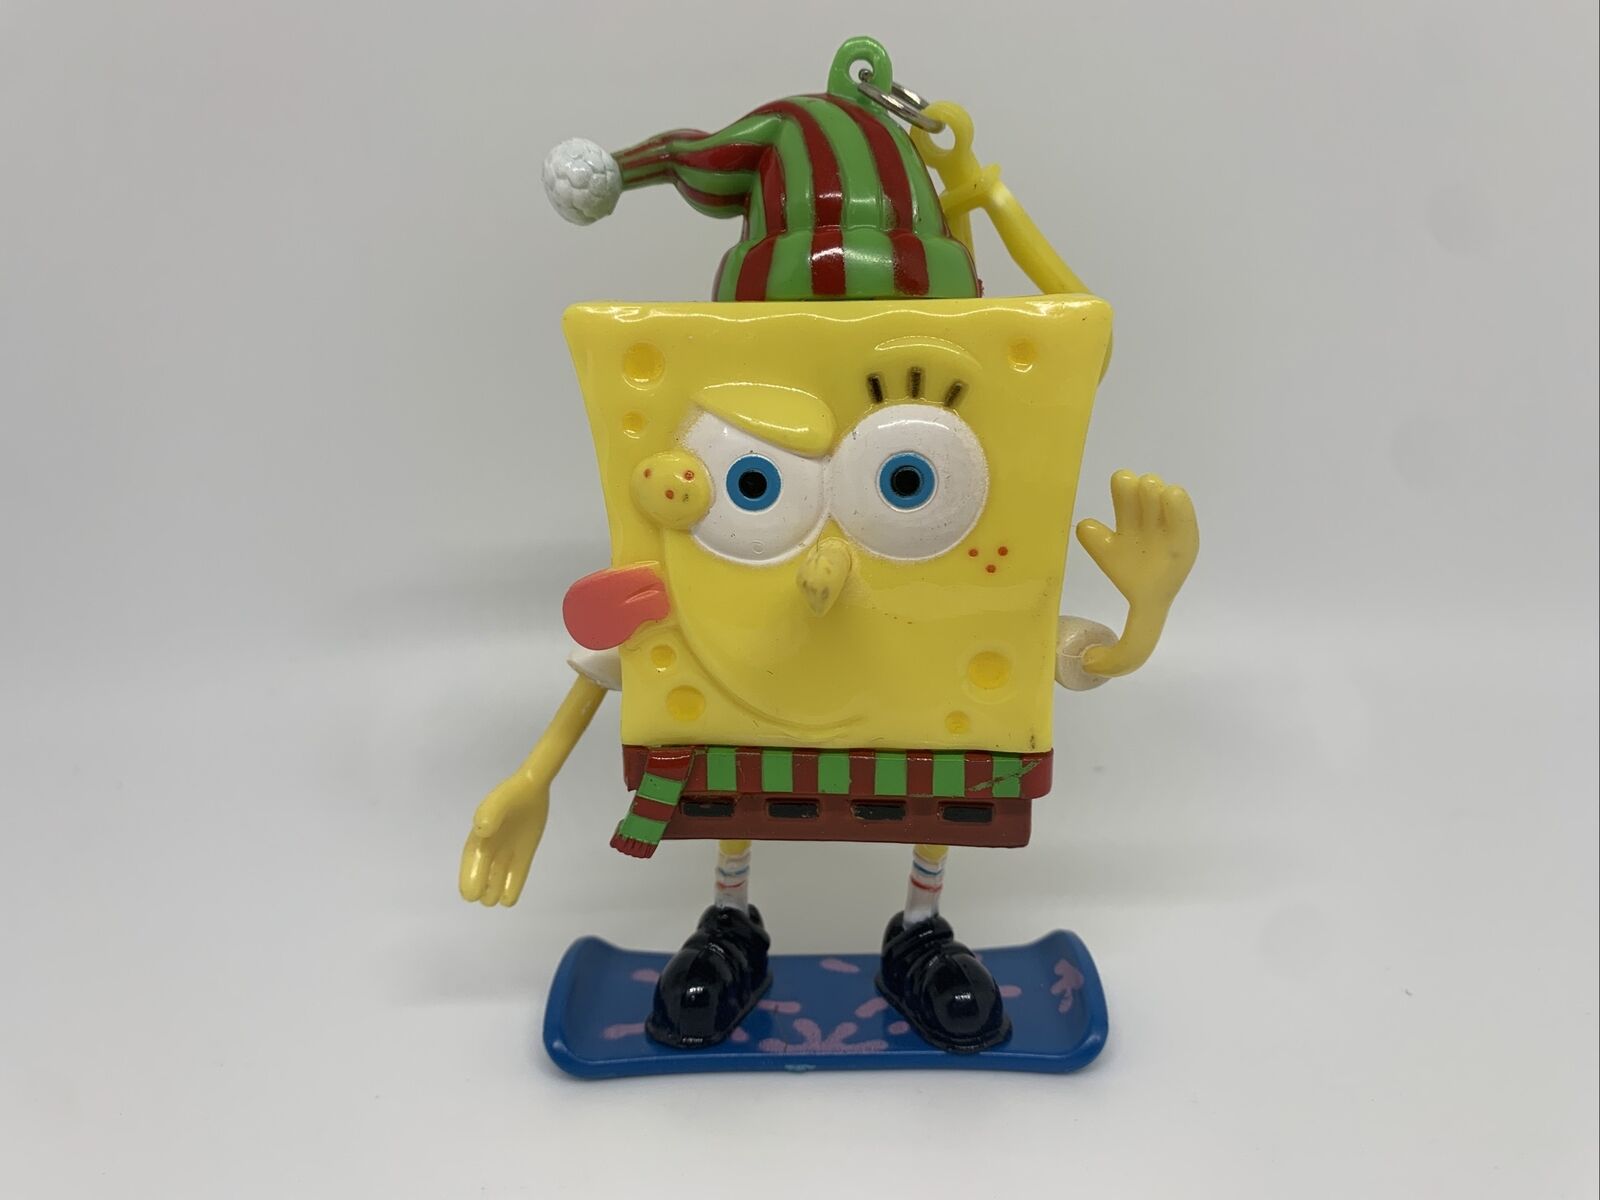 2005 Viacom Nickelodeon SpongeBob SquarePants Christmas Keychain on Snowboard